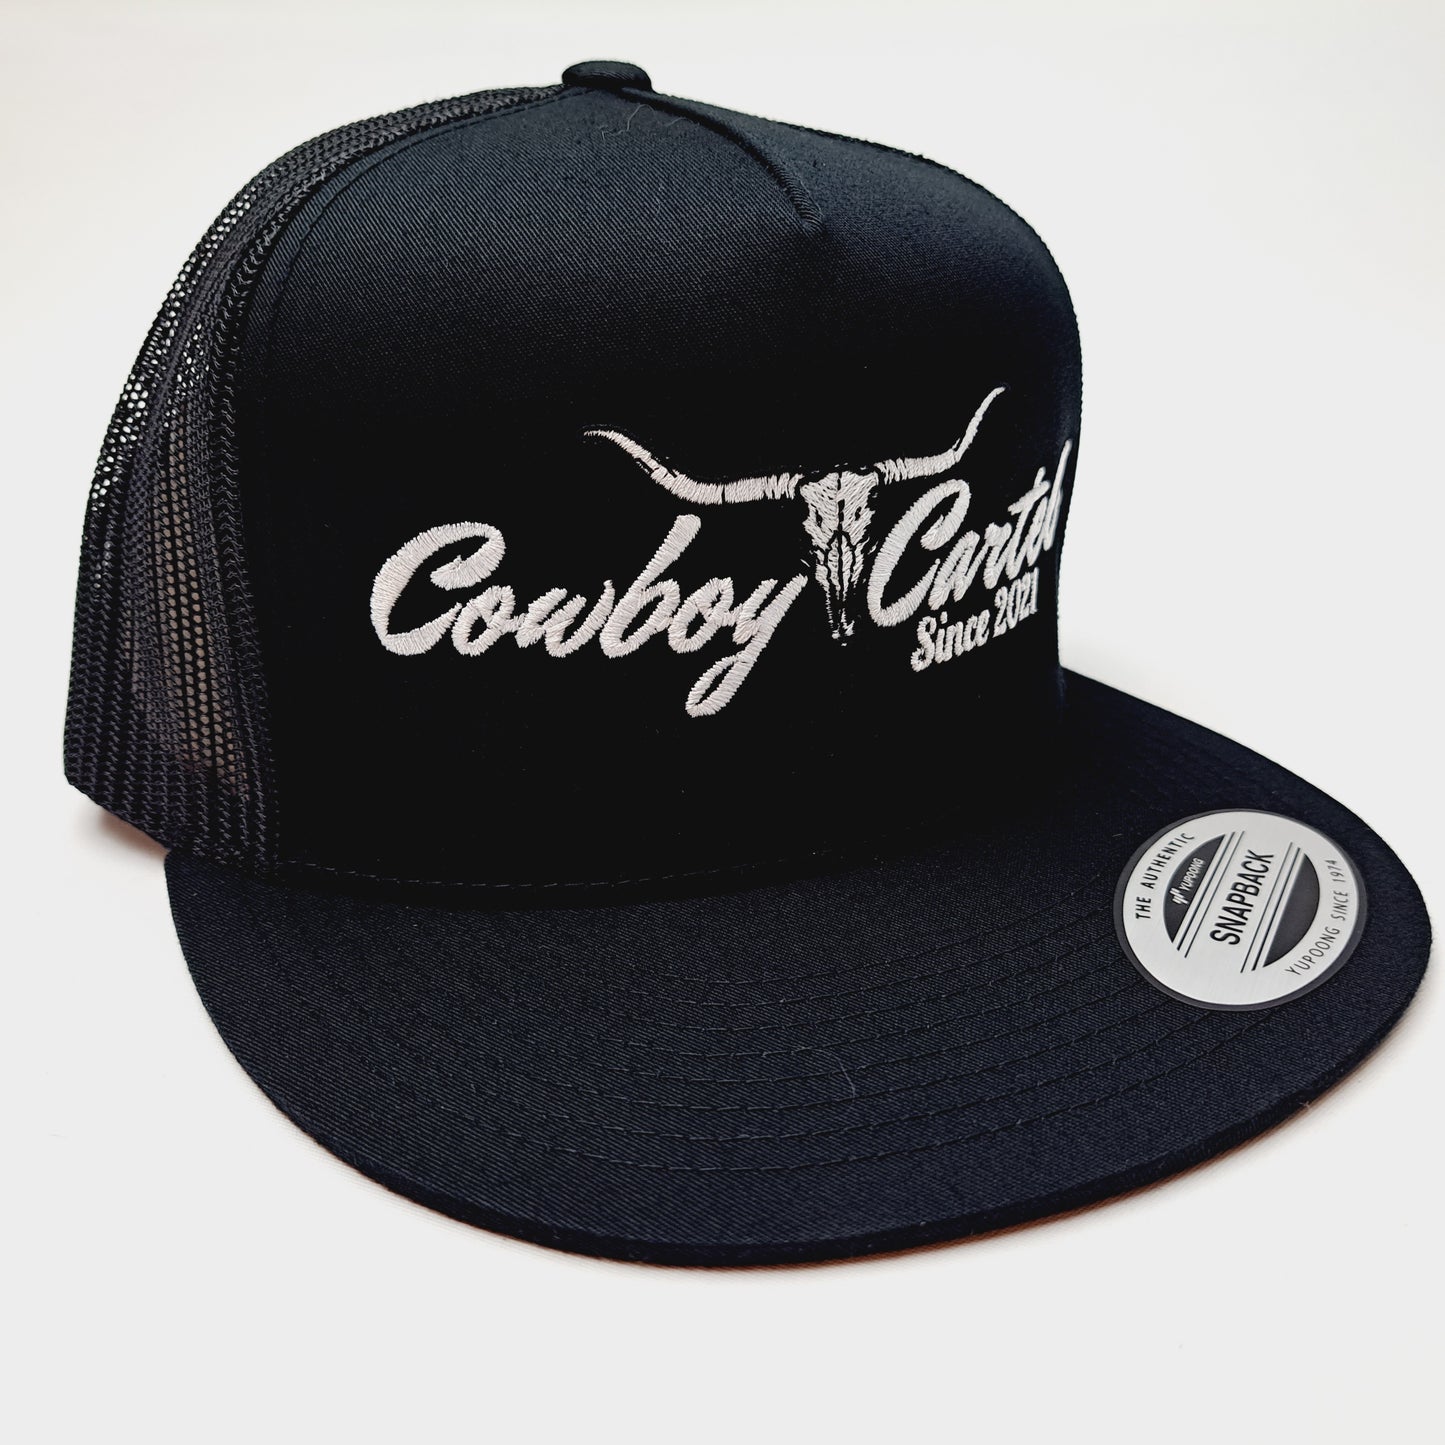 Cowboy Cartel Flat Bill Mesh Snapback Black Cap Hat Embroidered